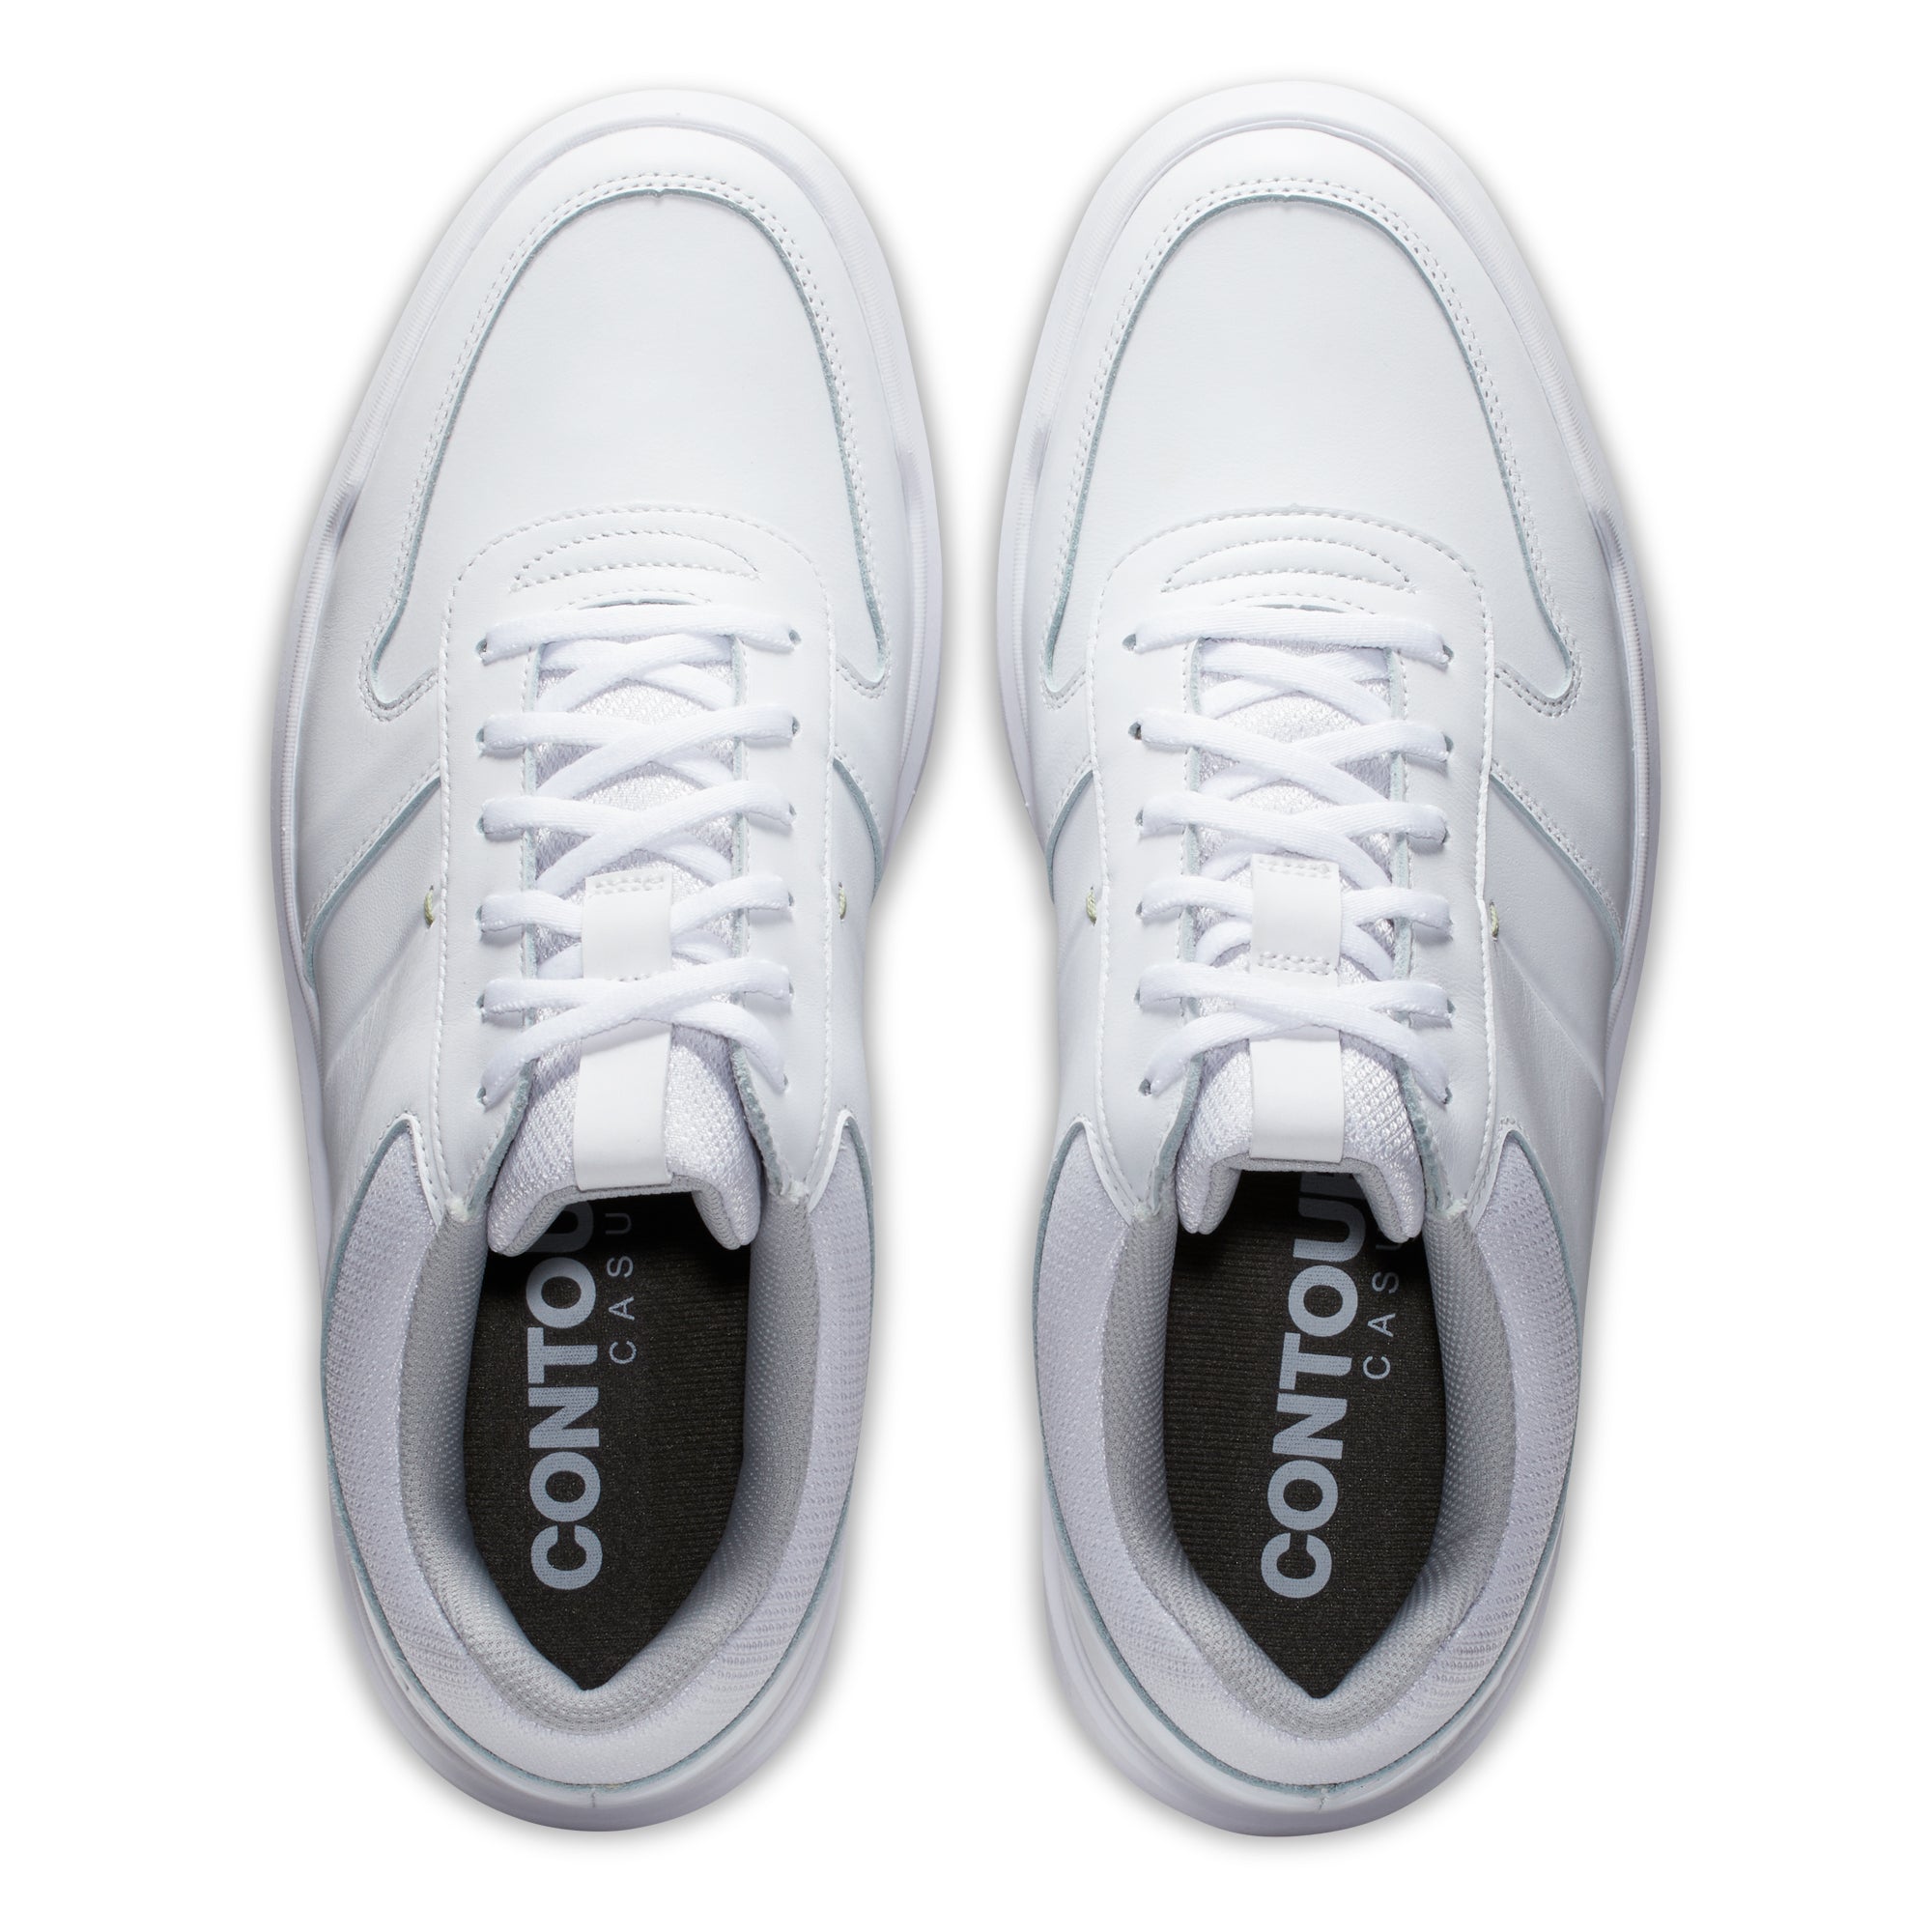 footjoy-contour-casual-golf-shoes-54370-white